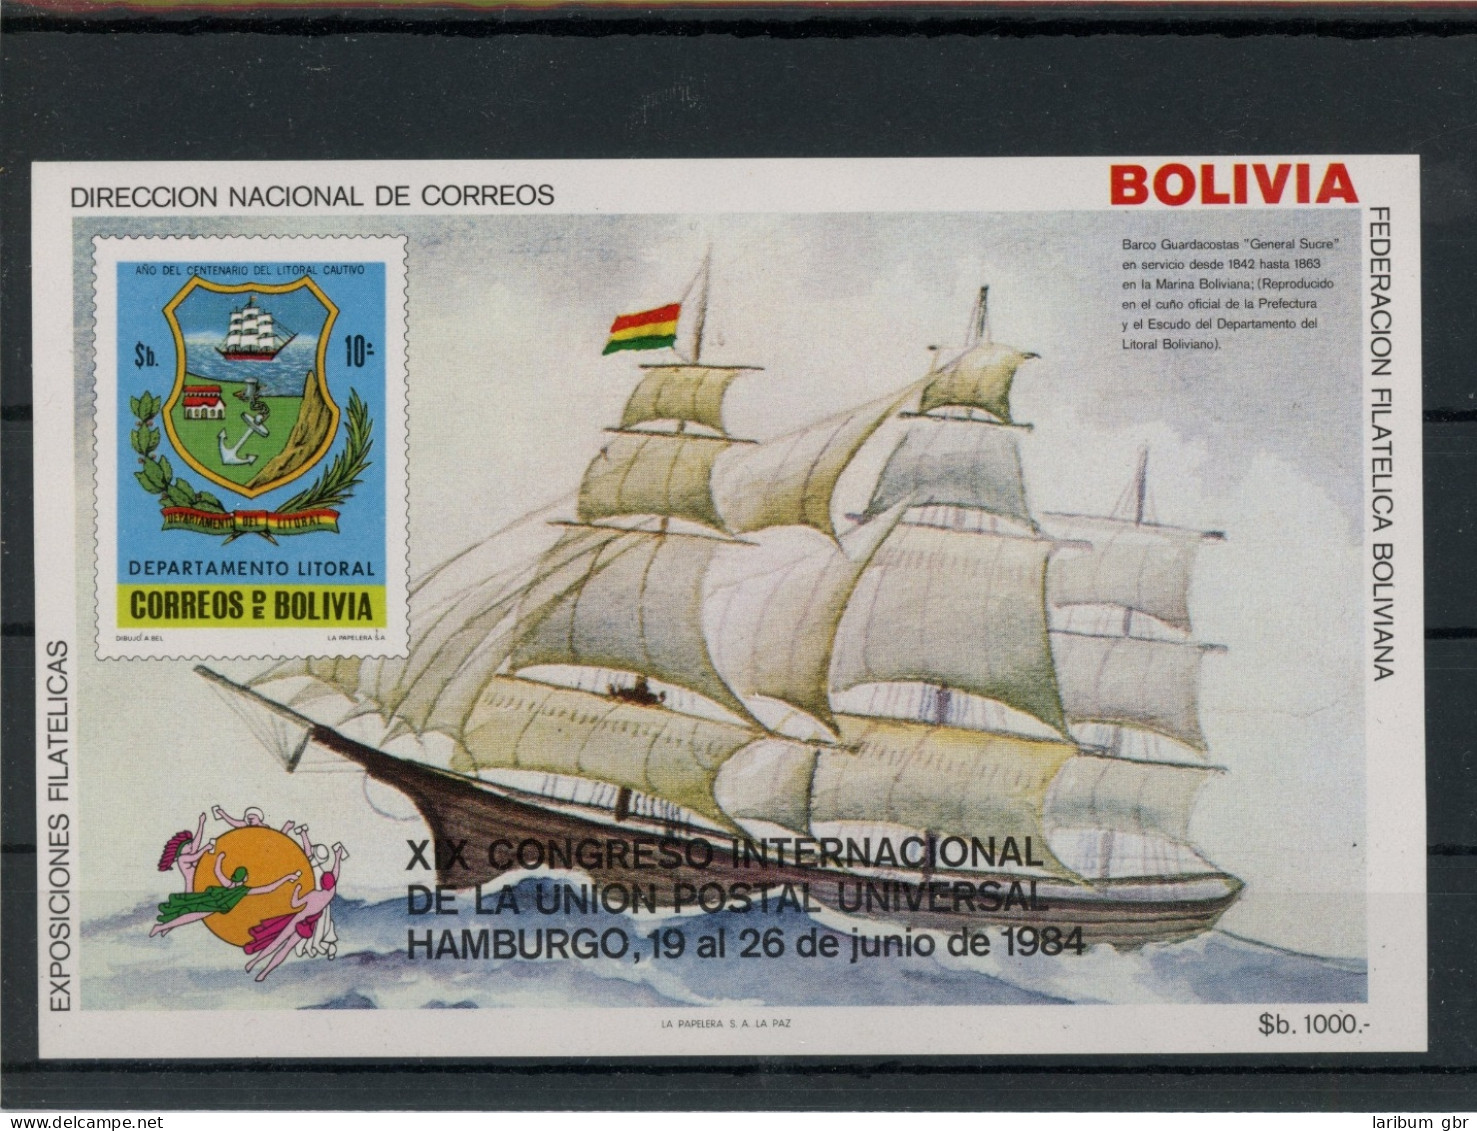 Bolivien Block 137 Postfrisch Segelschiff #HK851 - Bolivia